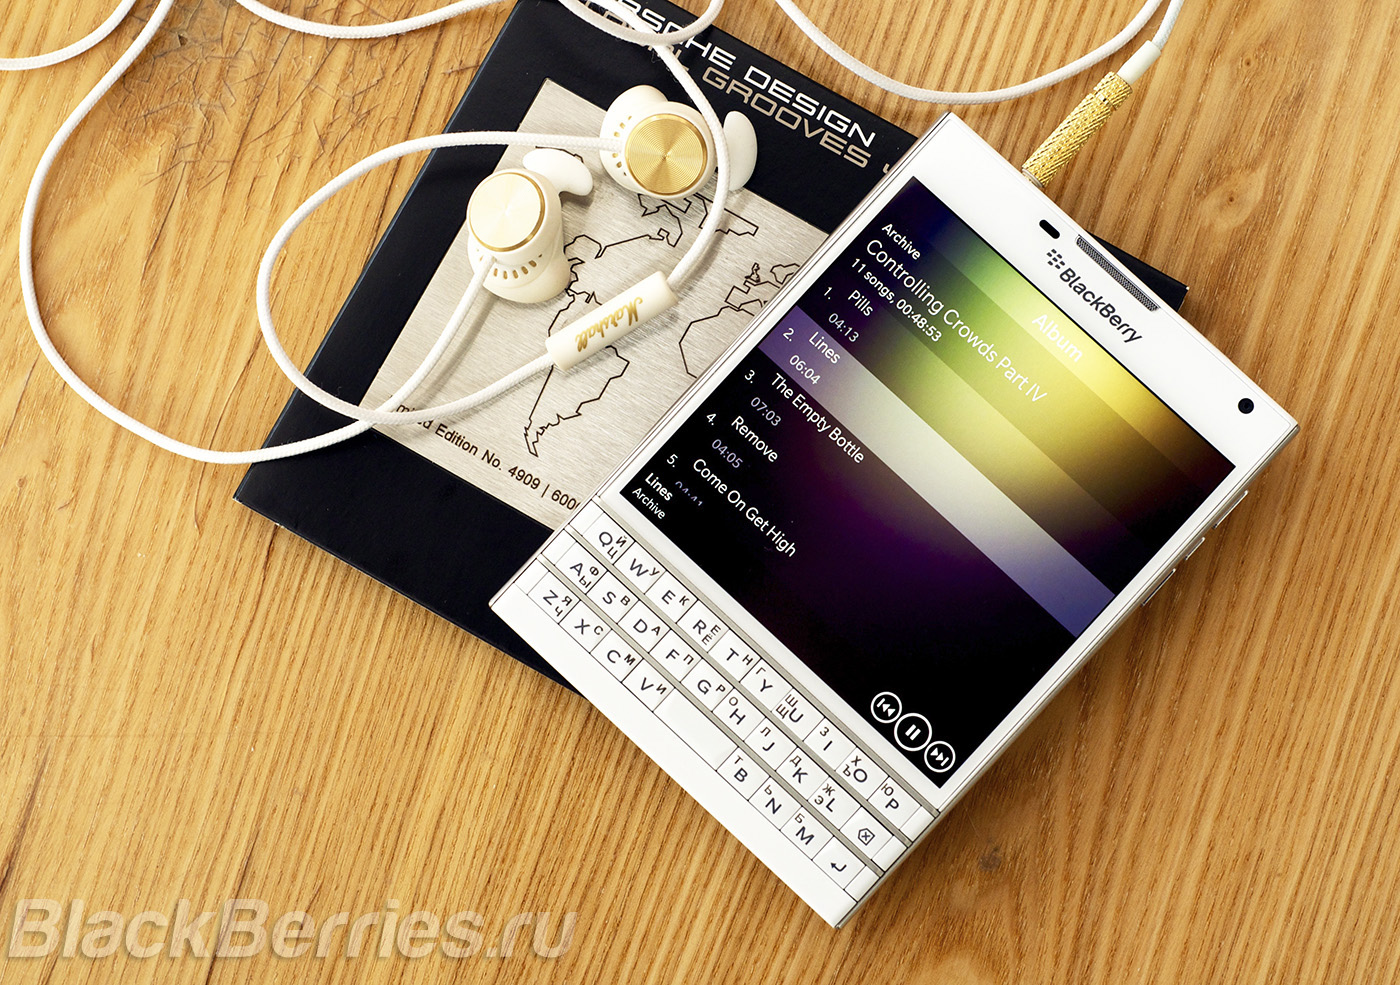 BlackBerry-Passport-Music-Apps-05